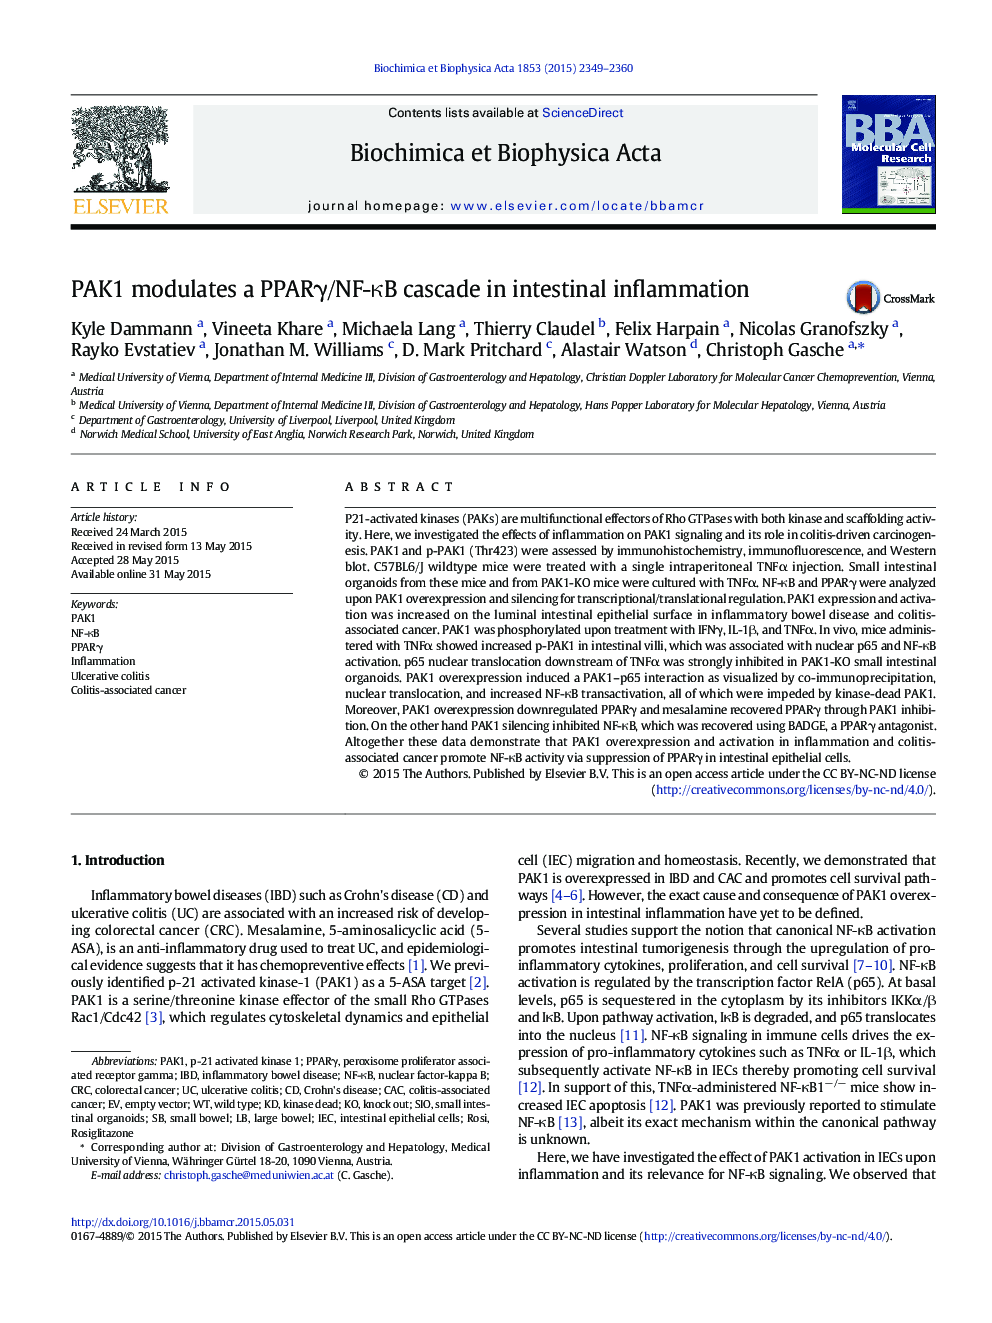 PAK1 modulates a PPARÎ³/NF-ÎºB cascade in intestinal inflammation